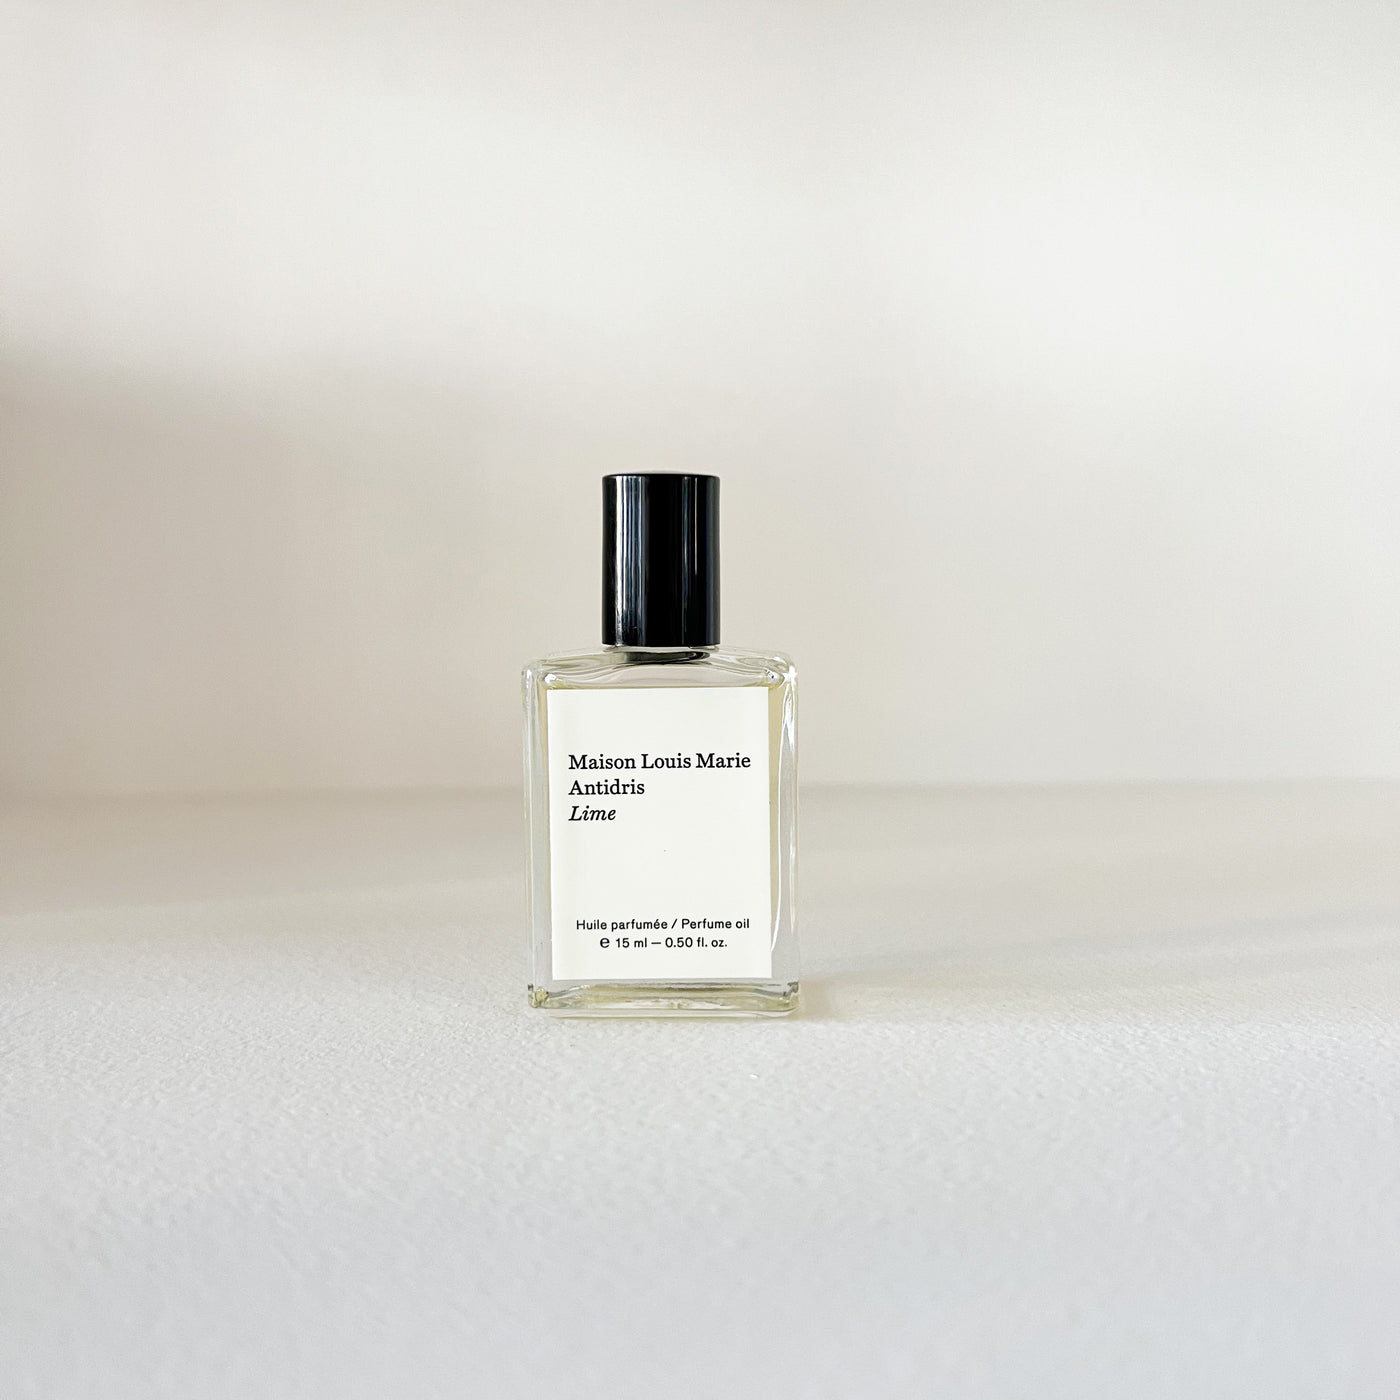 Maison Louis Marie Antidris/Lime Perfume Oil